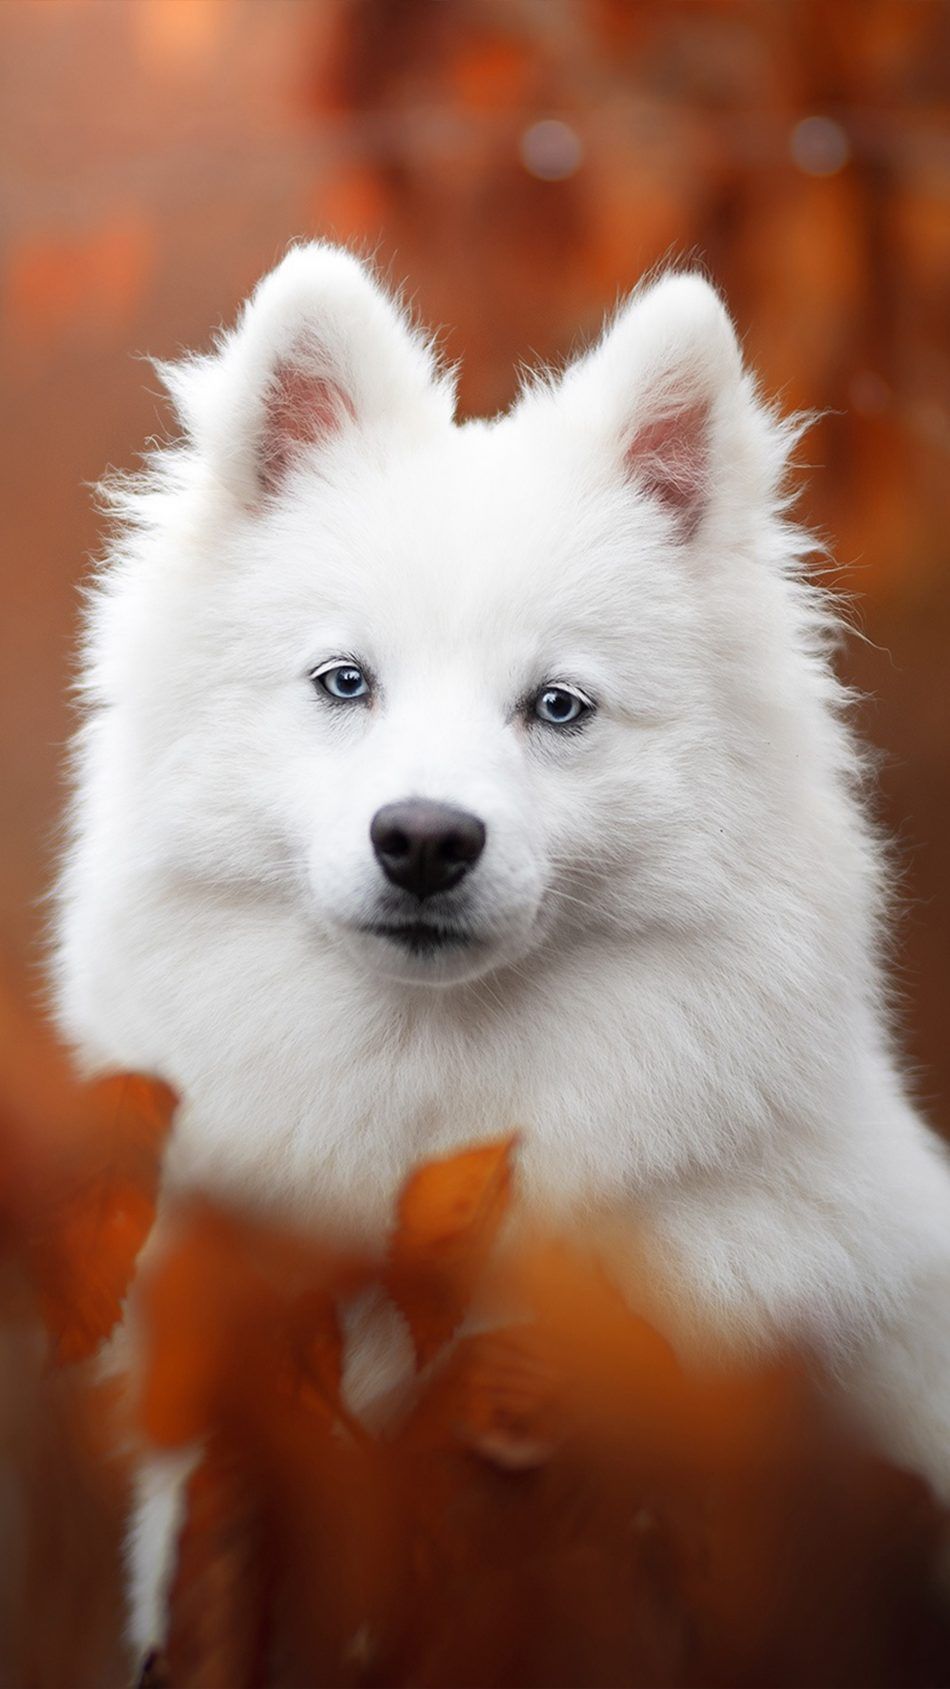 Spitz Pet Dog 4K Ultra HD Mobile Wallpaper. Cute baby animals, Baby animals, Cute animals